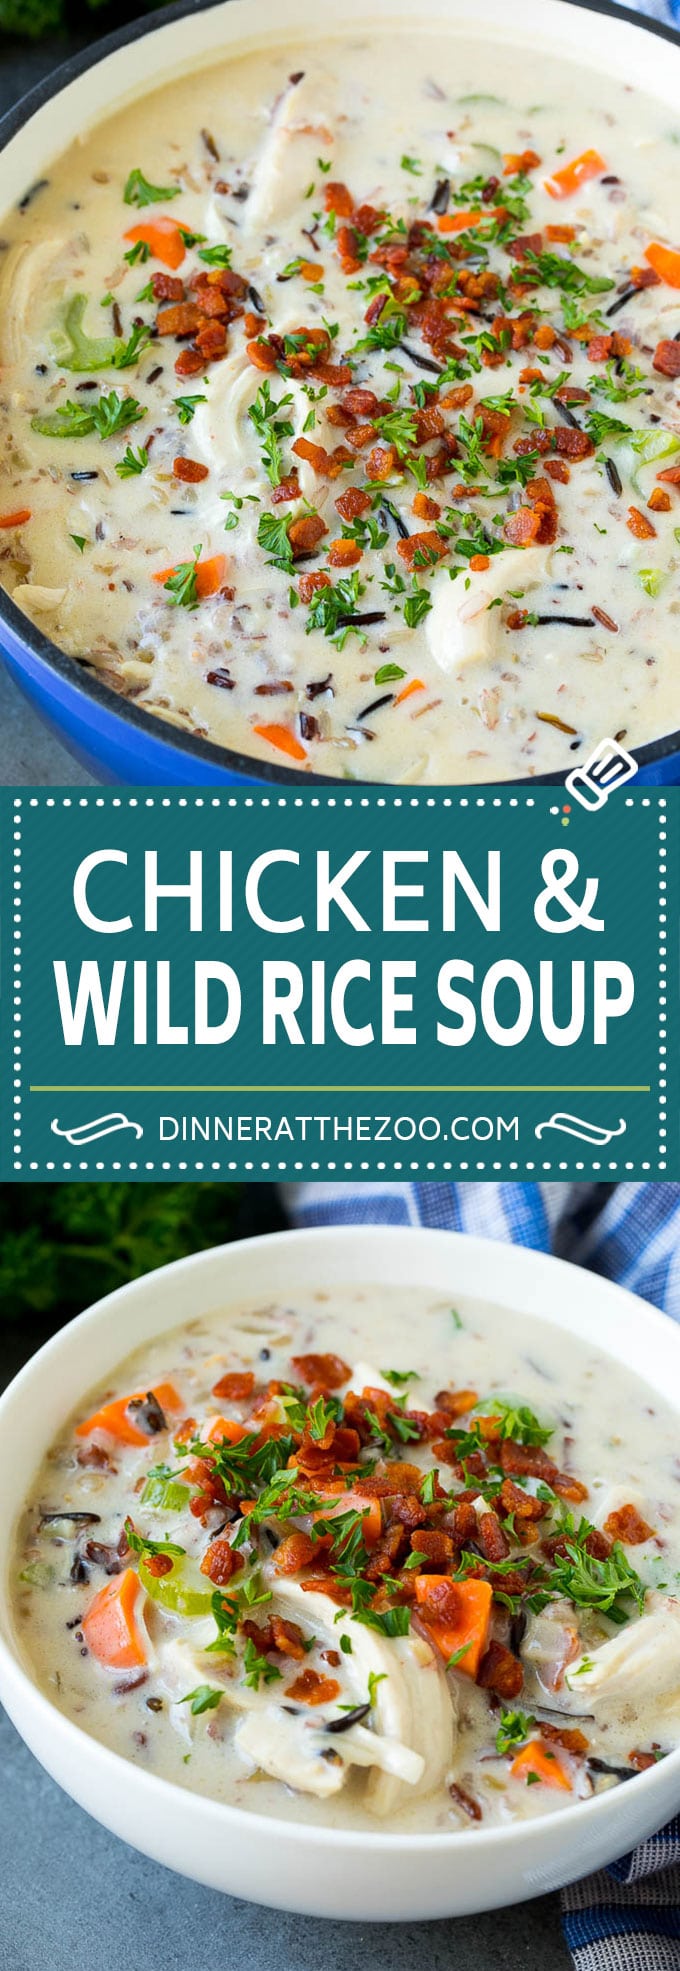 Chicken and Wild Rice Soup Recipe | Creamy Chicken Soup #chicken #rice #soup #bacon #dinner #dinneratthezoo